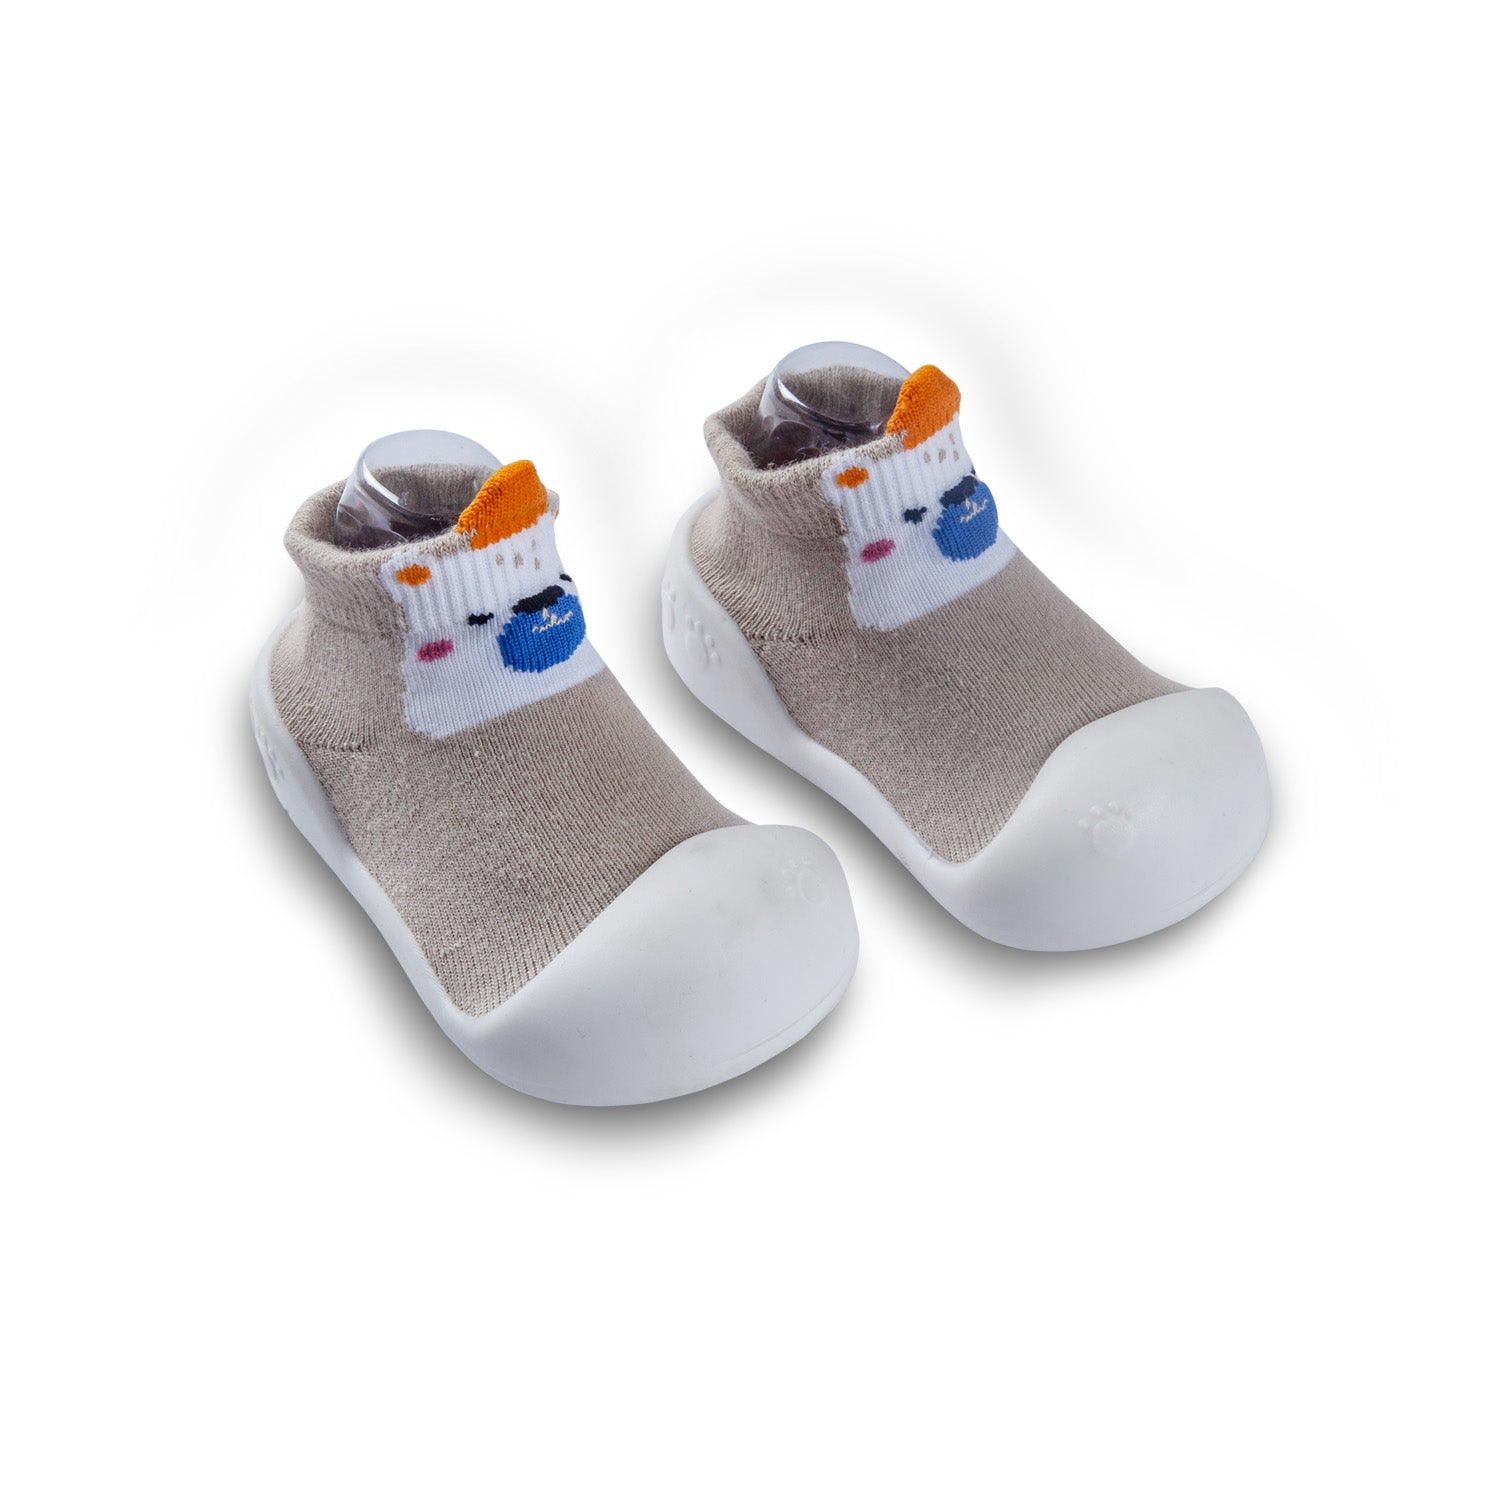 Newborn Anti-Skid Rubber Sole Slip-On Shoes Teddy - Beige